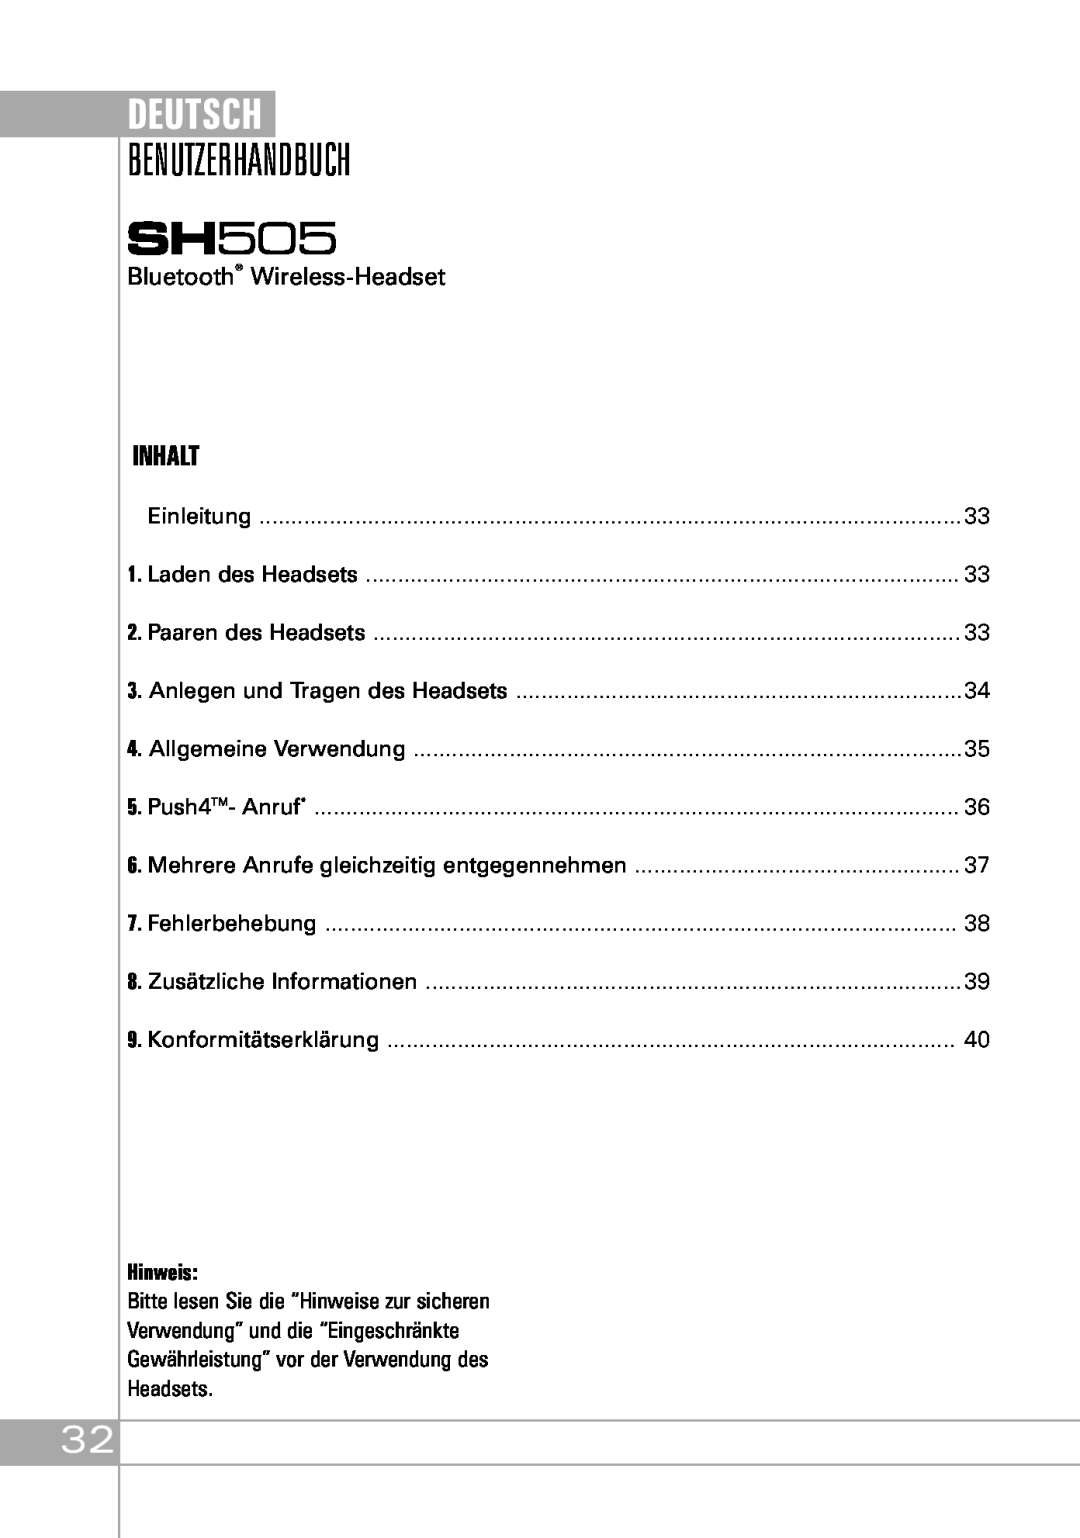 Southwing SH505 manual Benutzerhandbuch, Deutsch, Inhalt, Bluetooth Wireless-Headset, Hinweis 